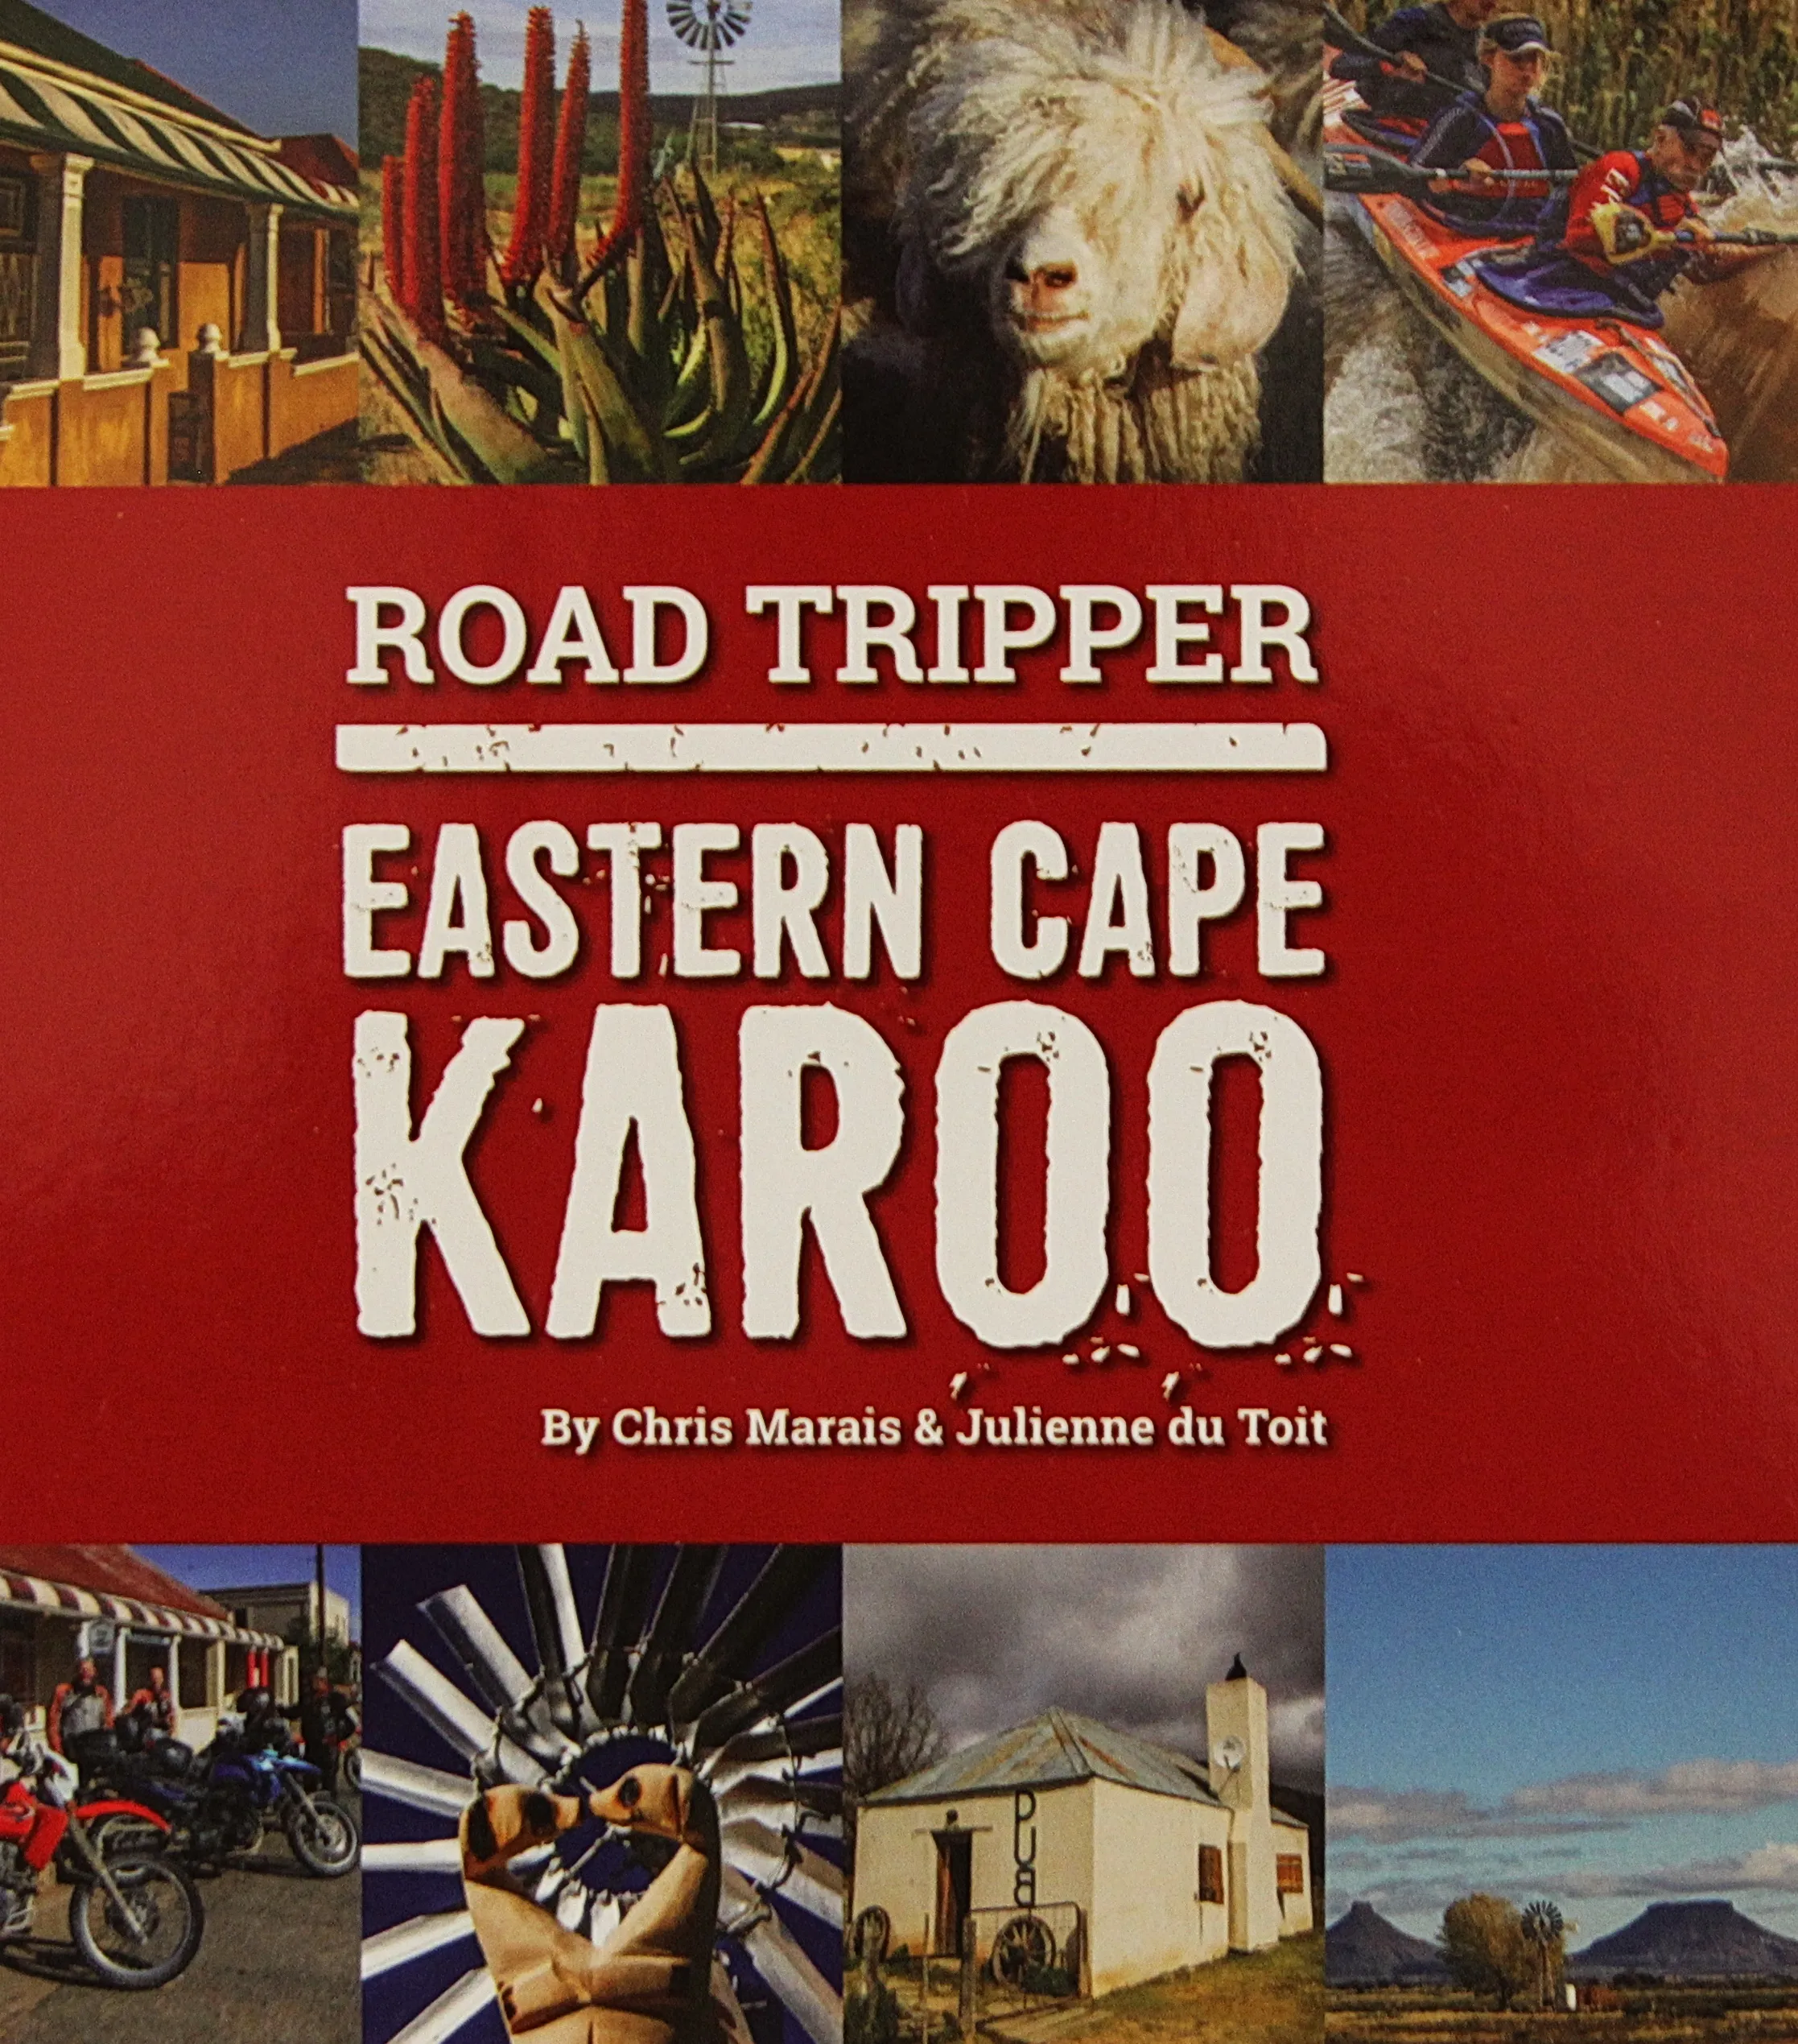 ‘Road Tripper: Eastern Cape Karoo’ by Chris Marais and Julienne du Toit.